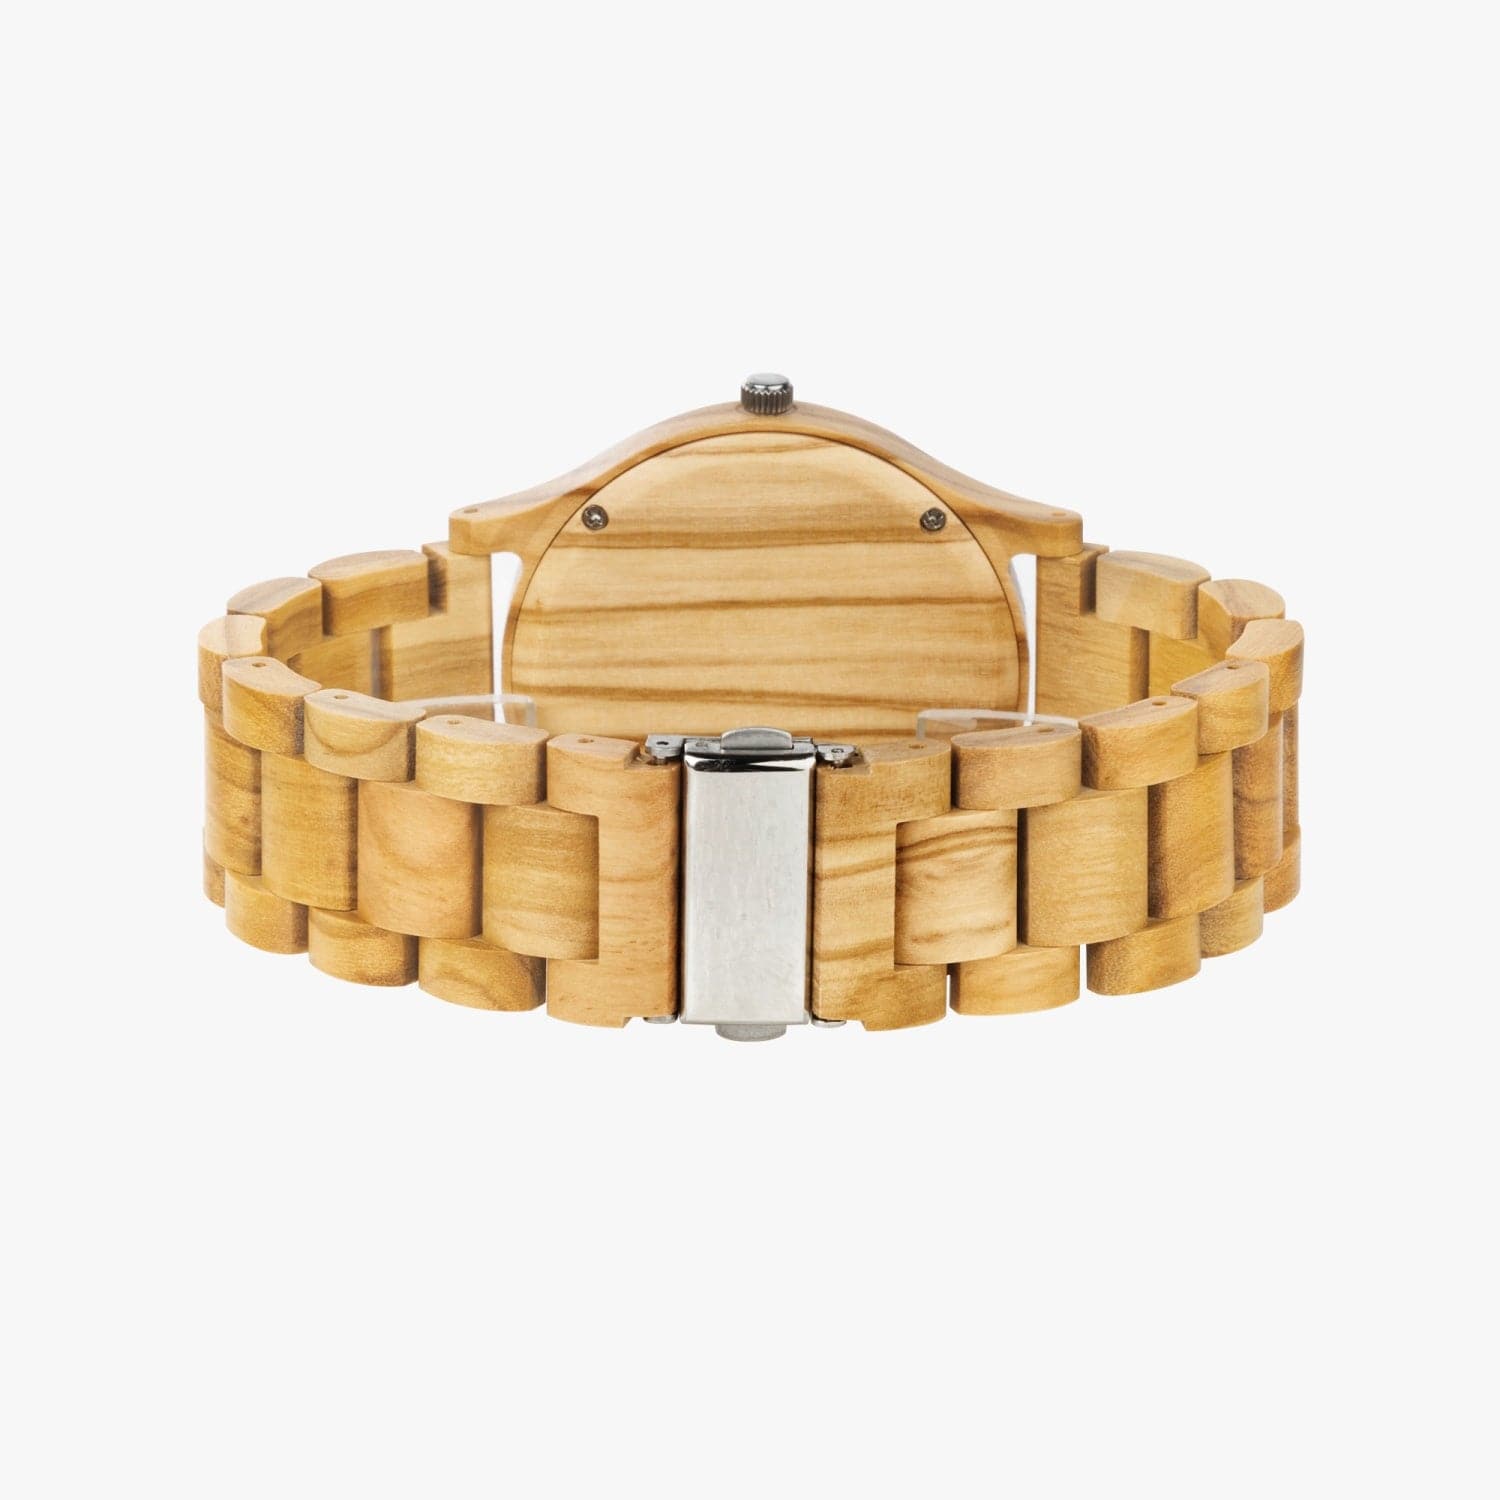 Blue Star, Olive Lumber Wooden Watch, by Sensus Studio Design